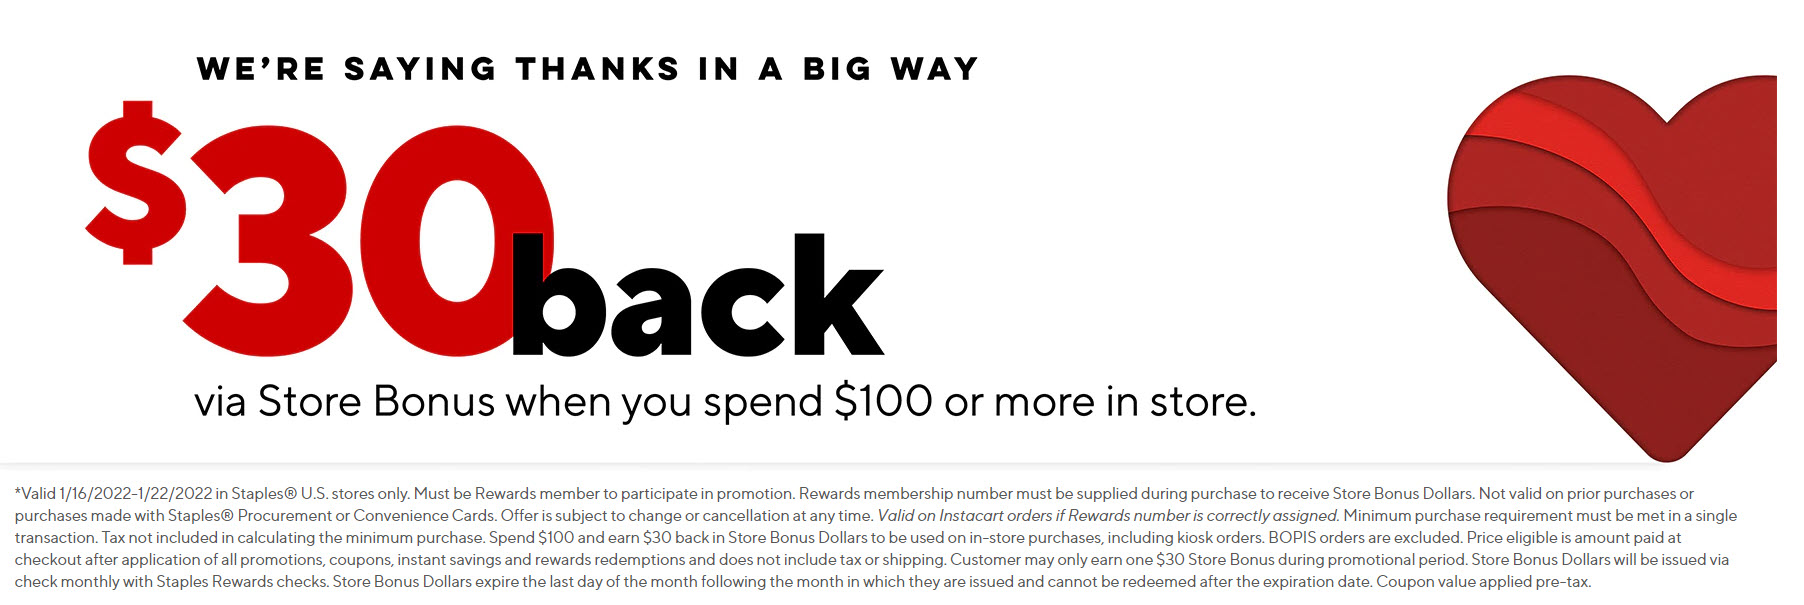 Staples - $30 Back via Store bonus when you spend $100